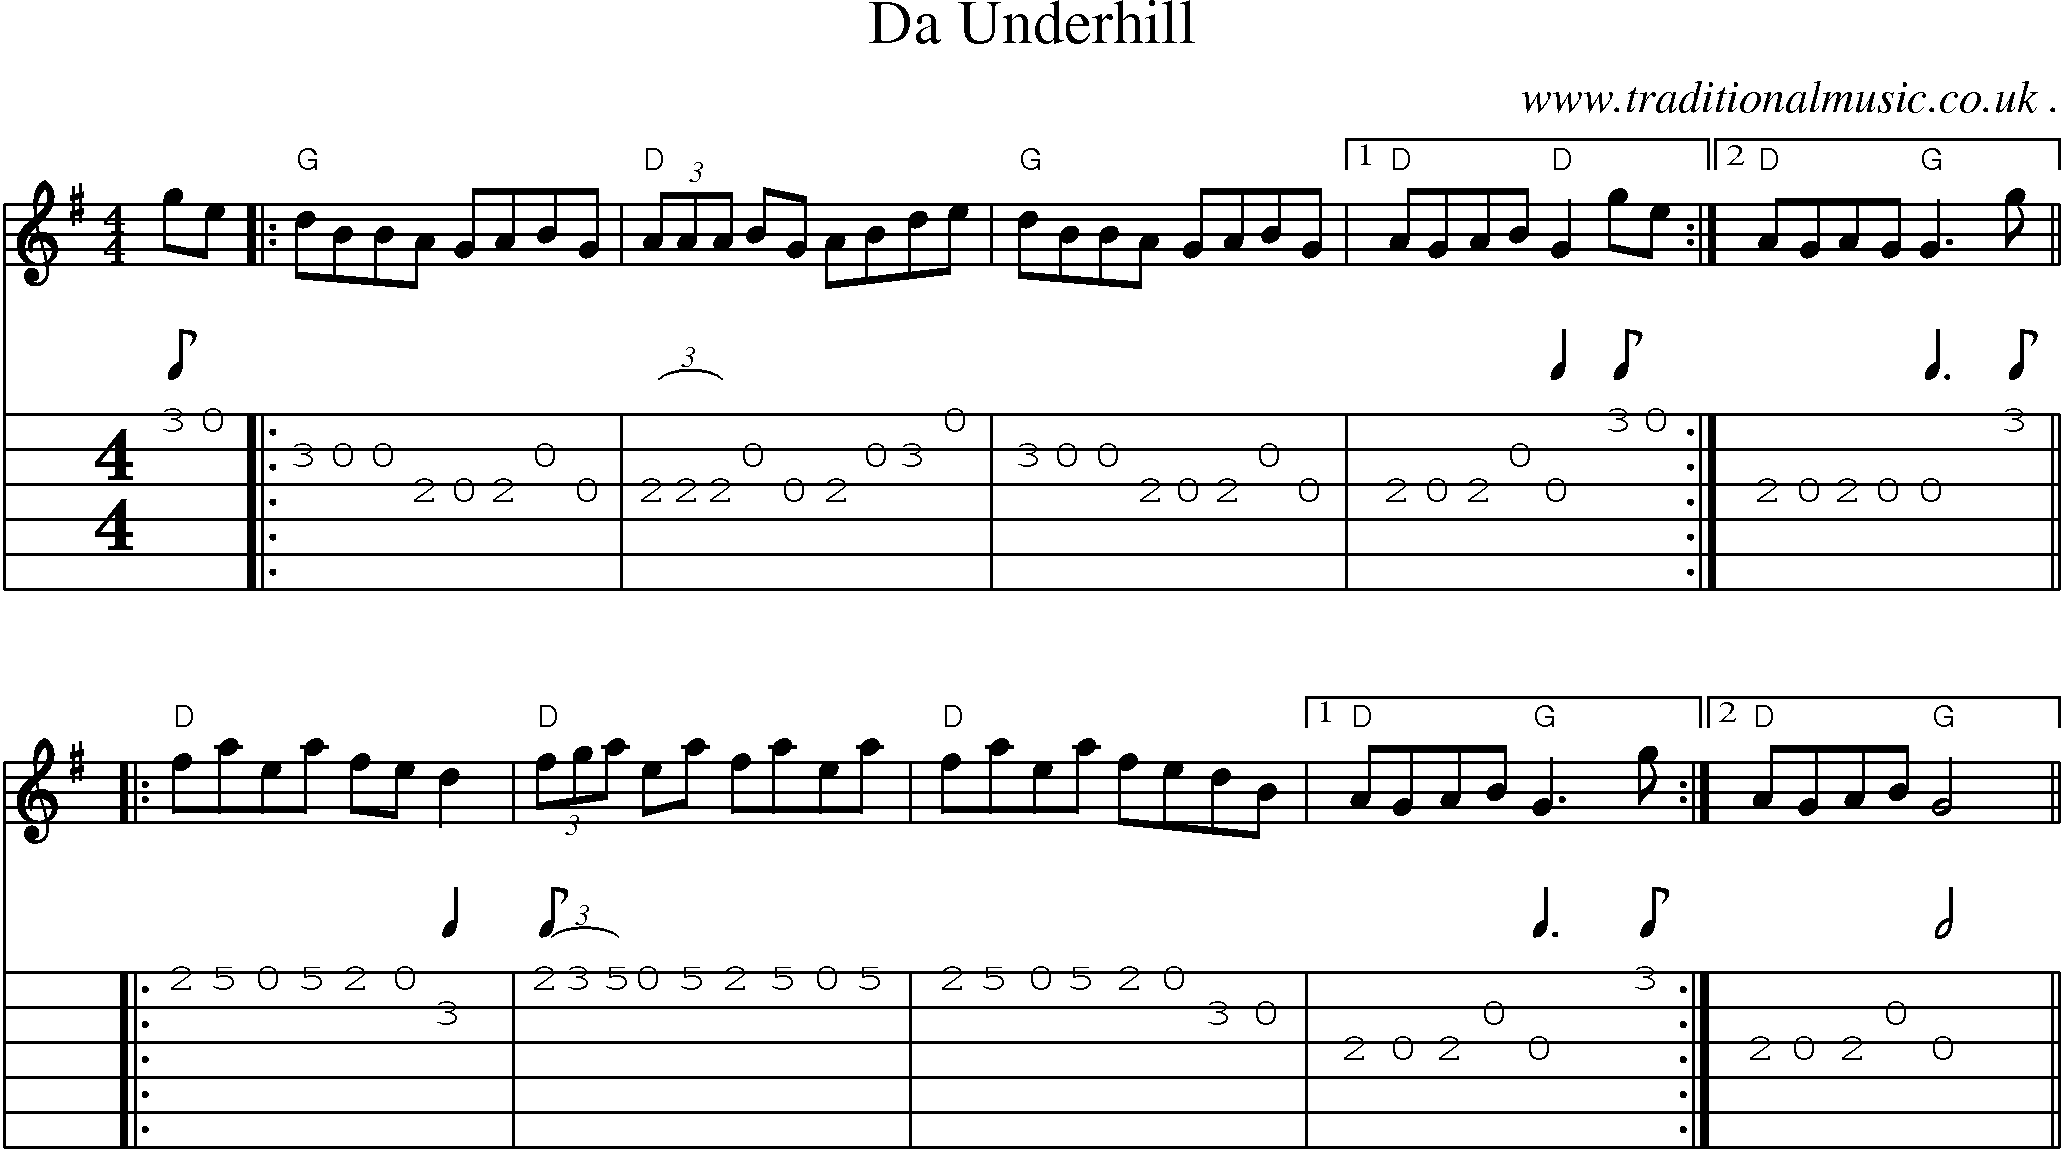 Sheet-Music and Guitar Tabs for Da Underhill